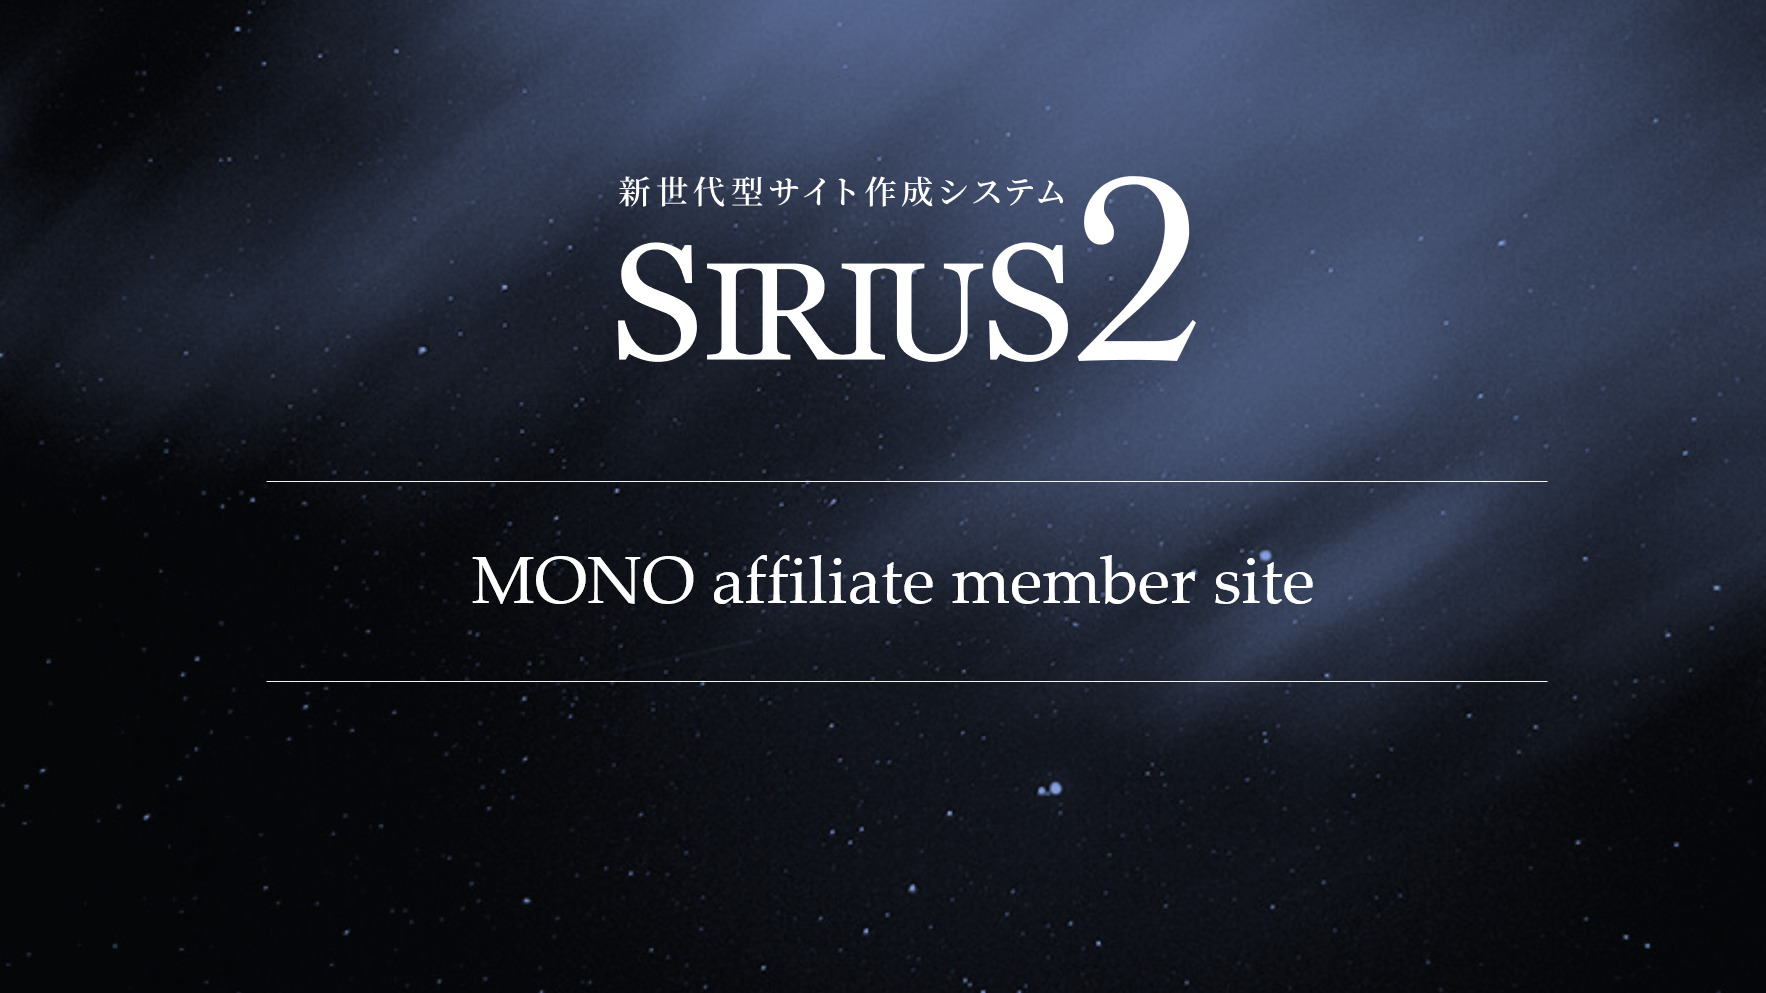 Mono affiliate member site